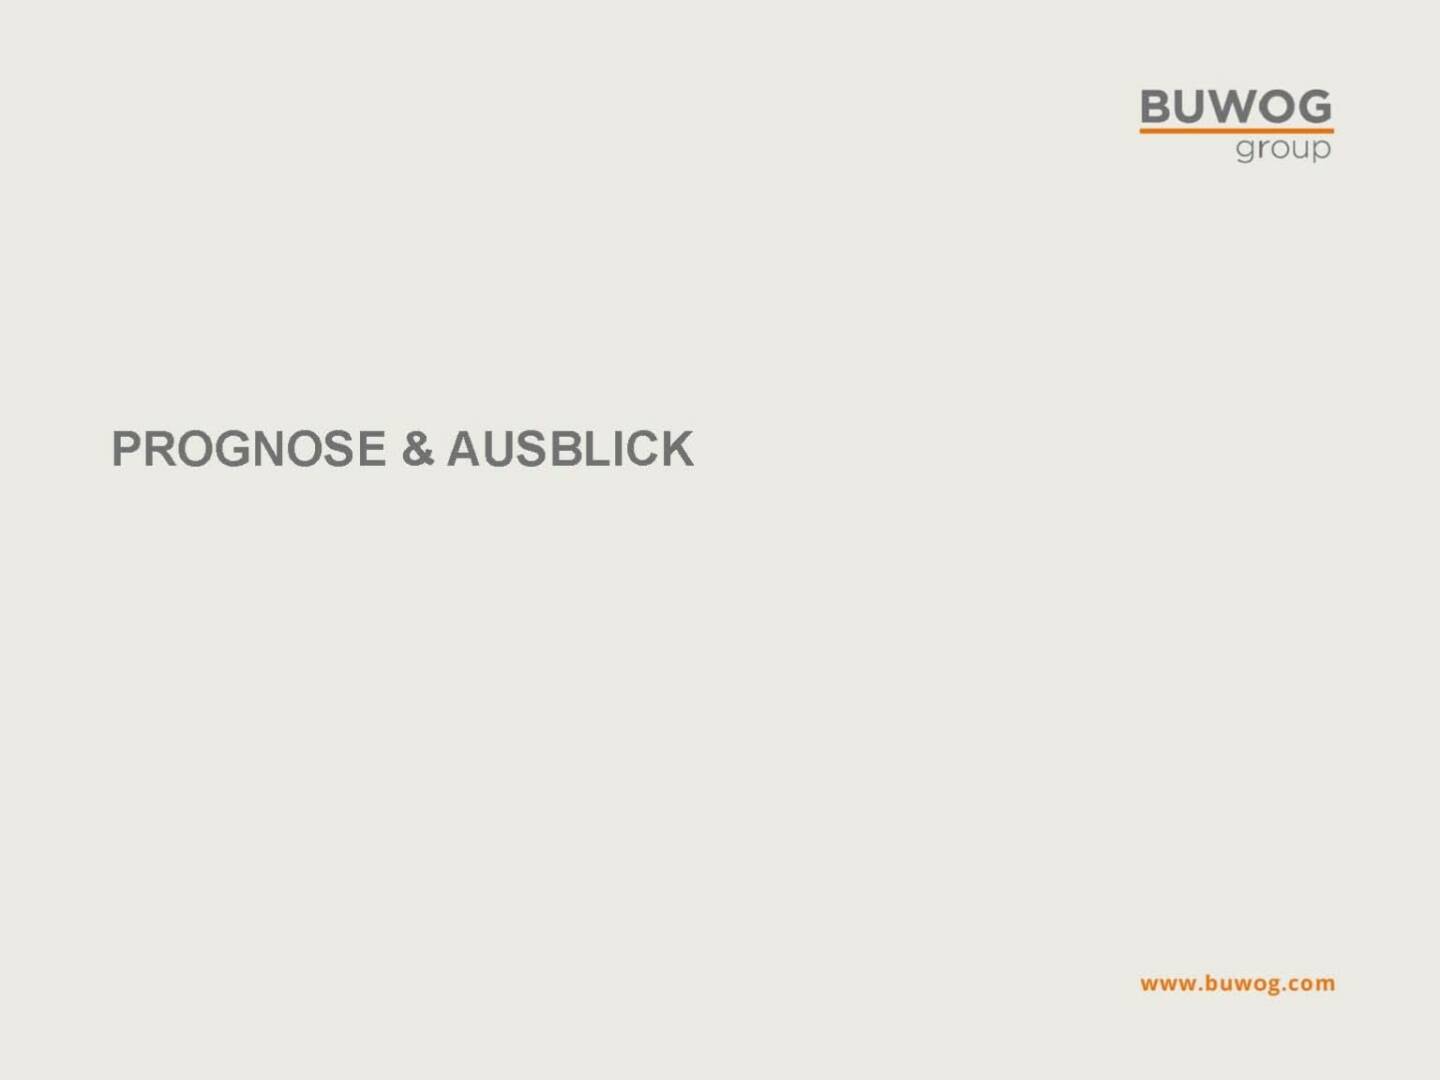 Buwog Group - Prognose & Ausblick